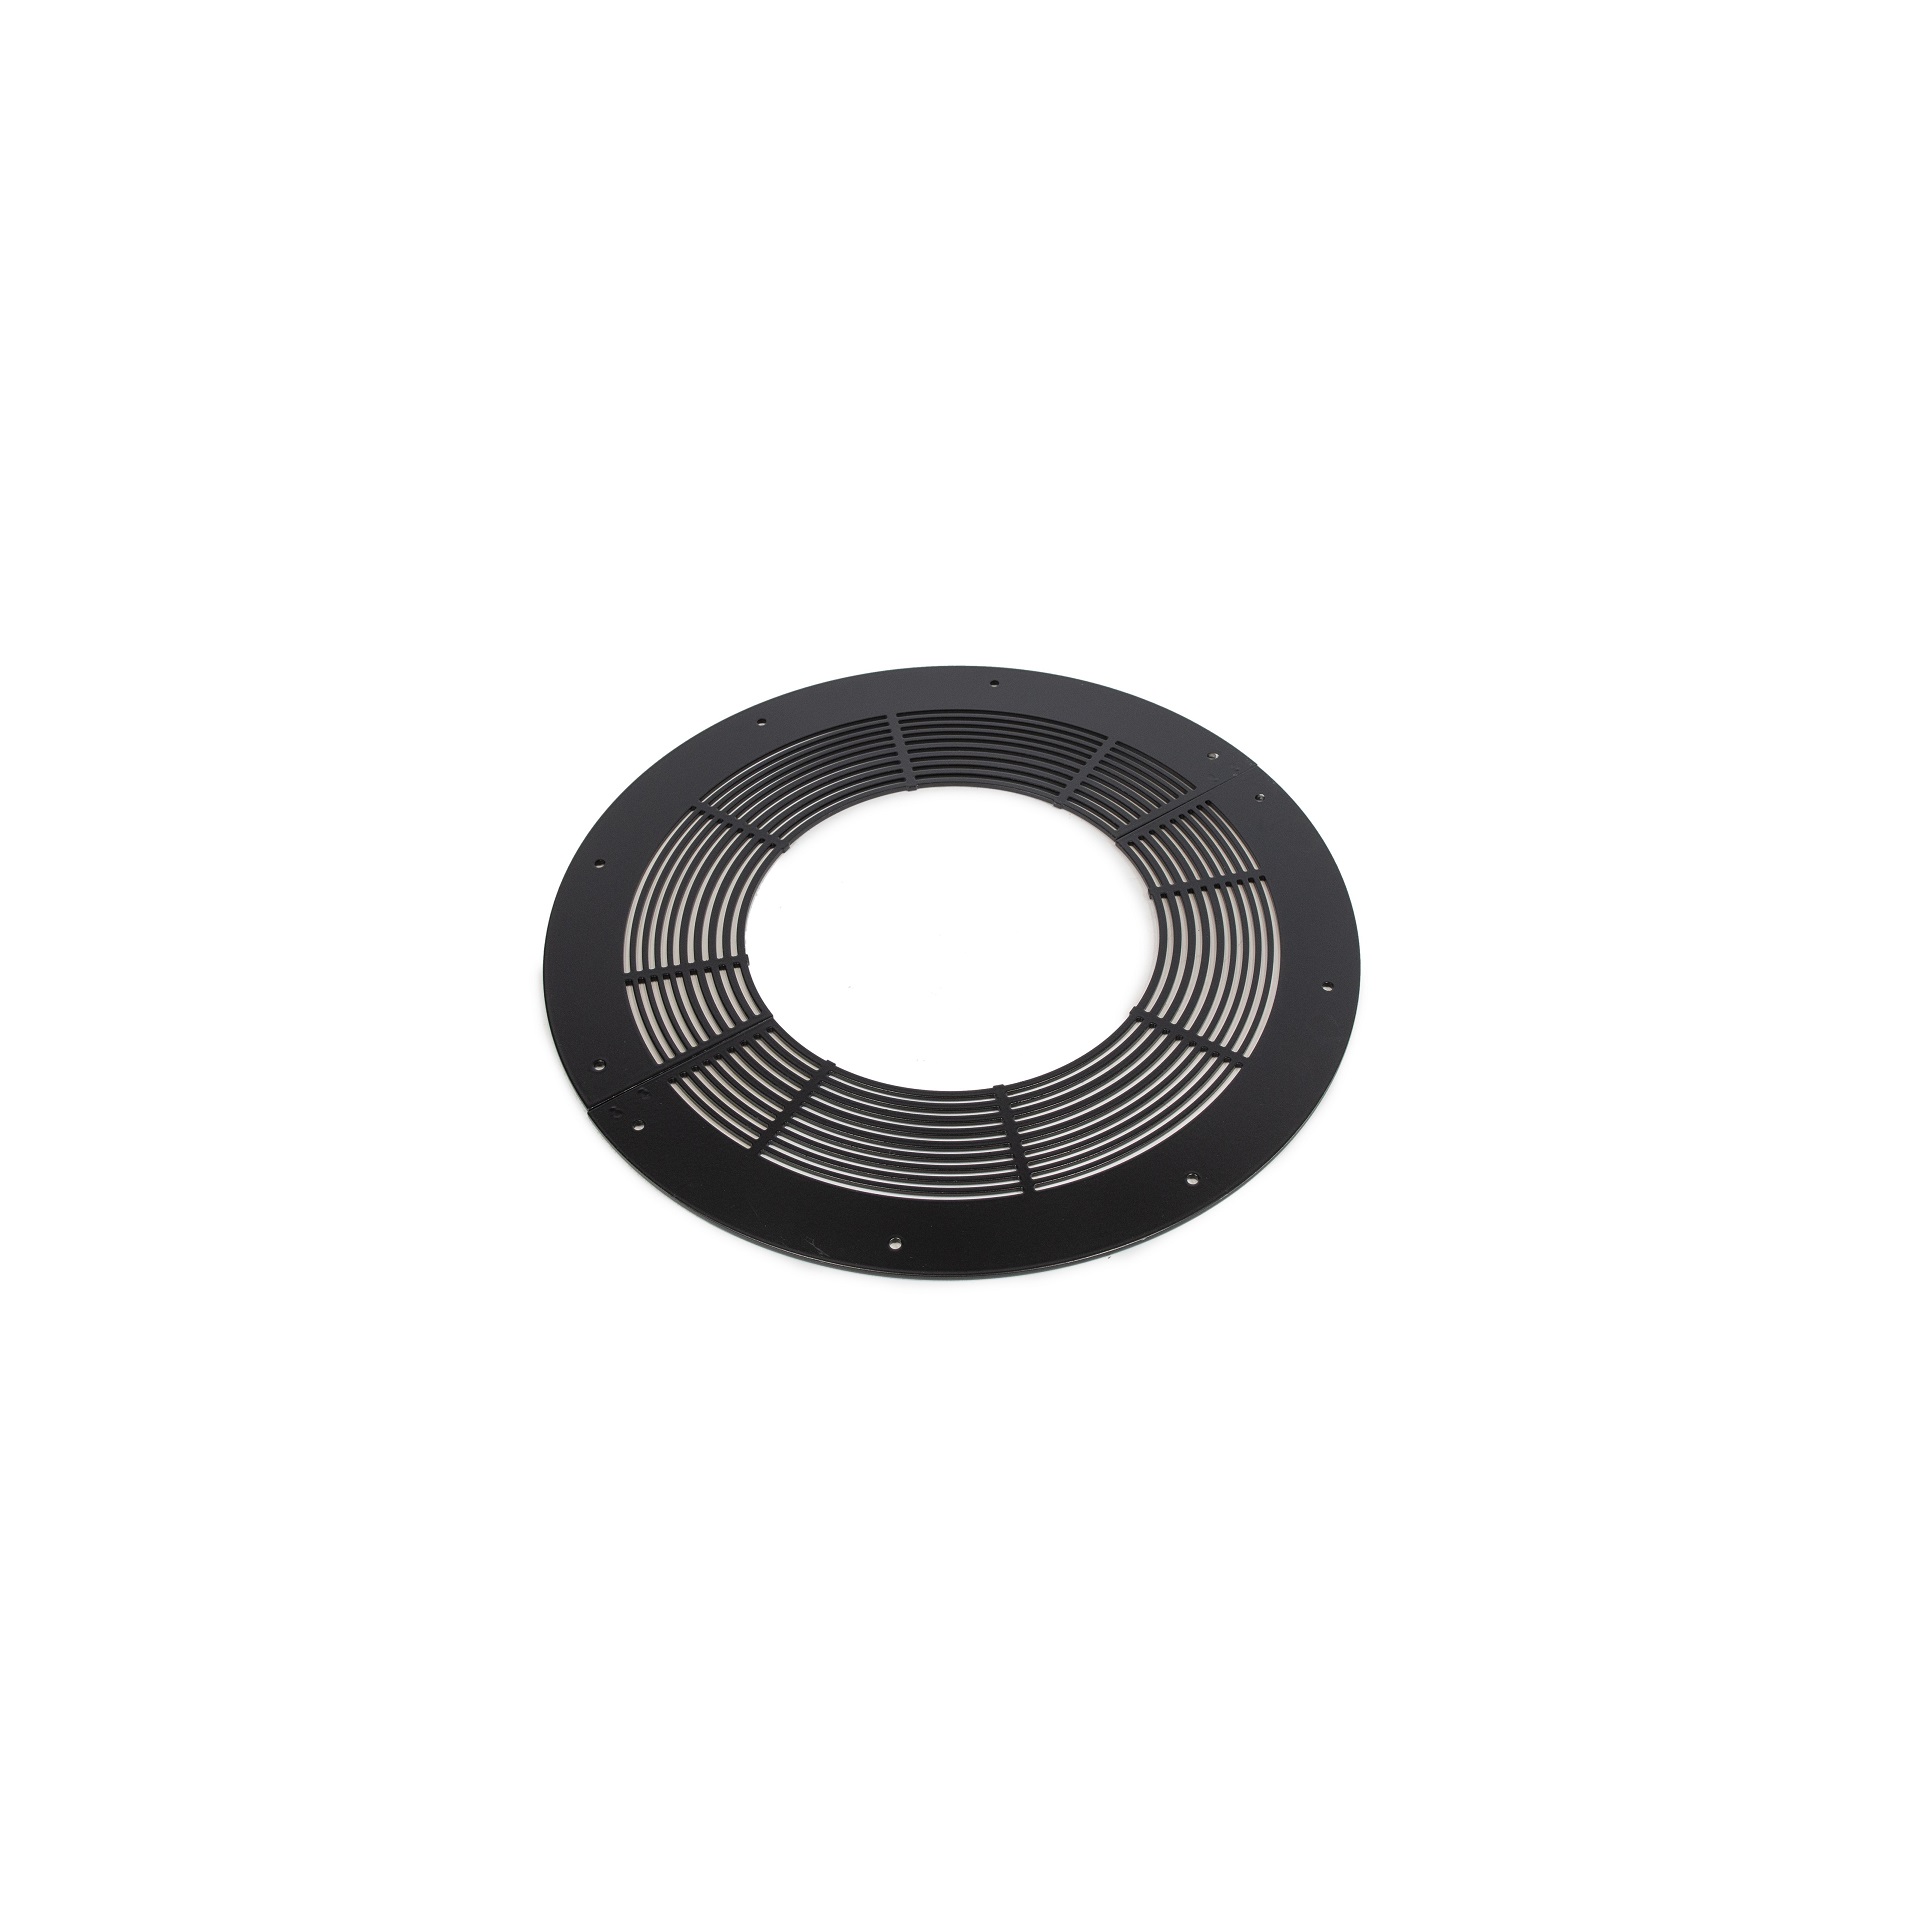 Ventilated Round Firestop Plate - Schiedel Twin Wall Flue - Black